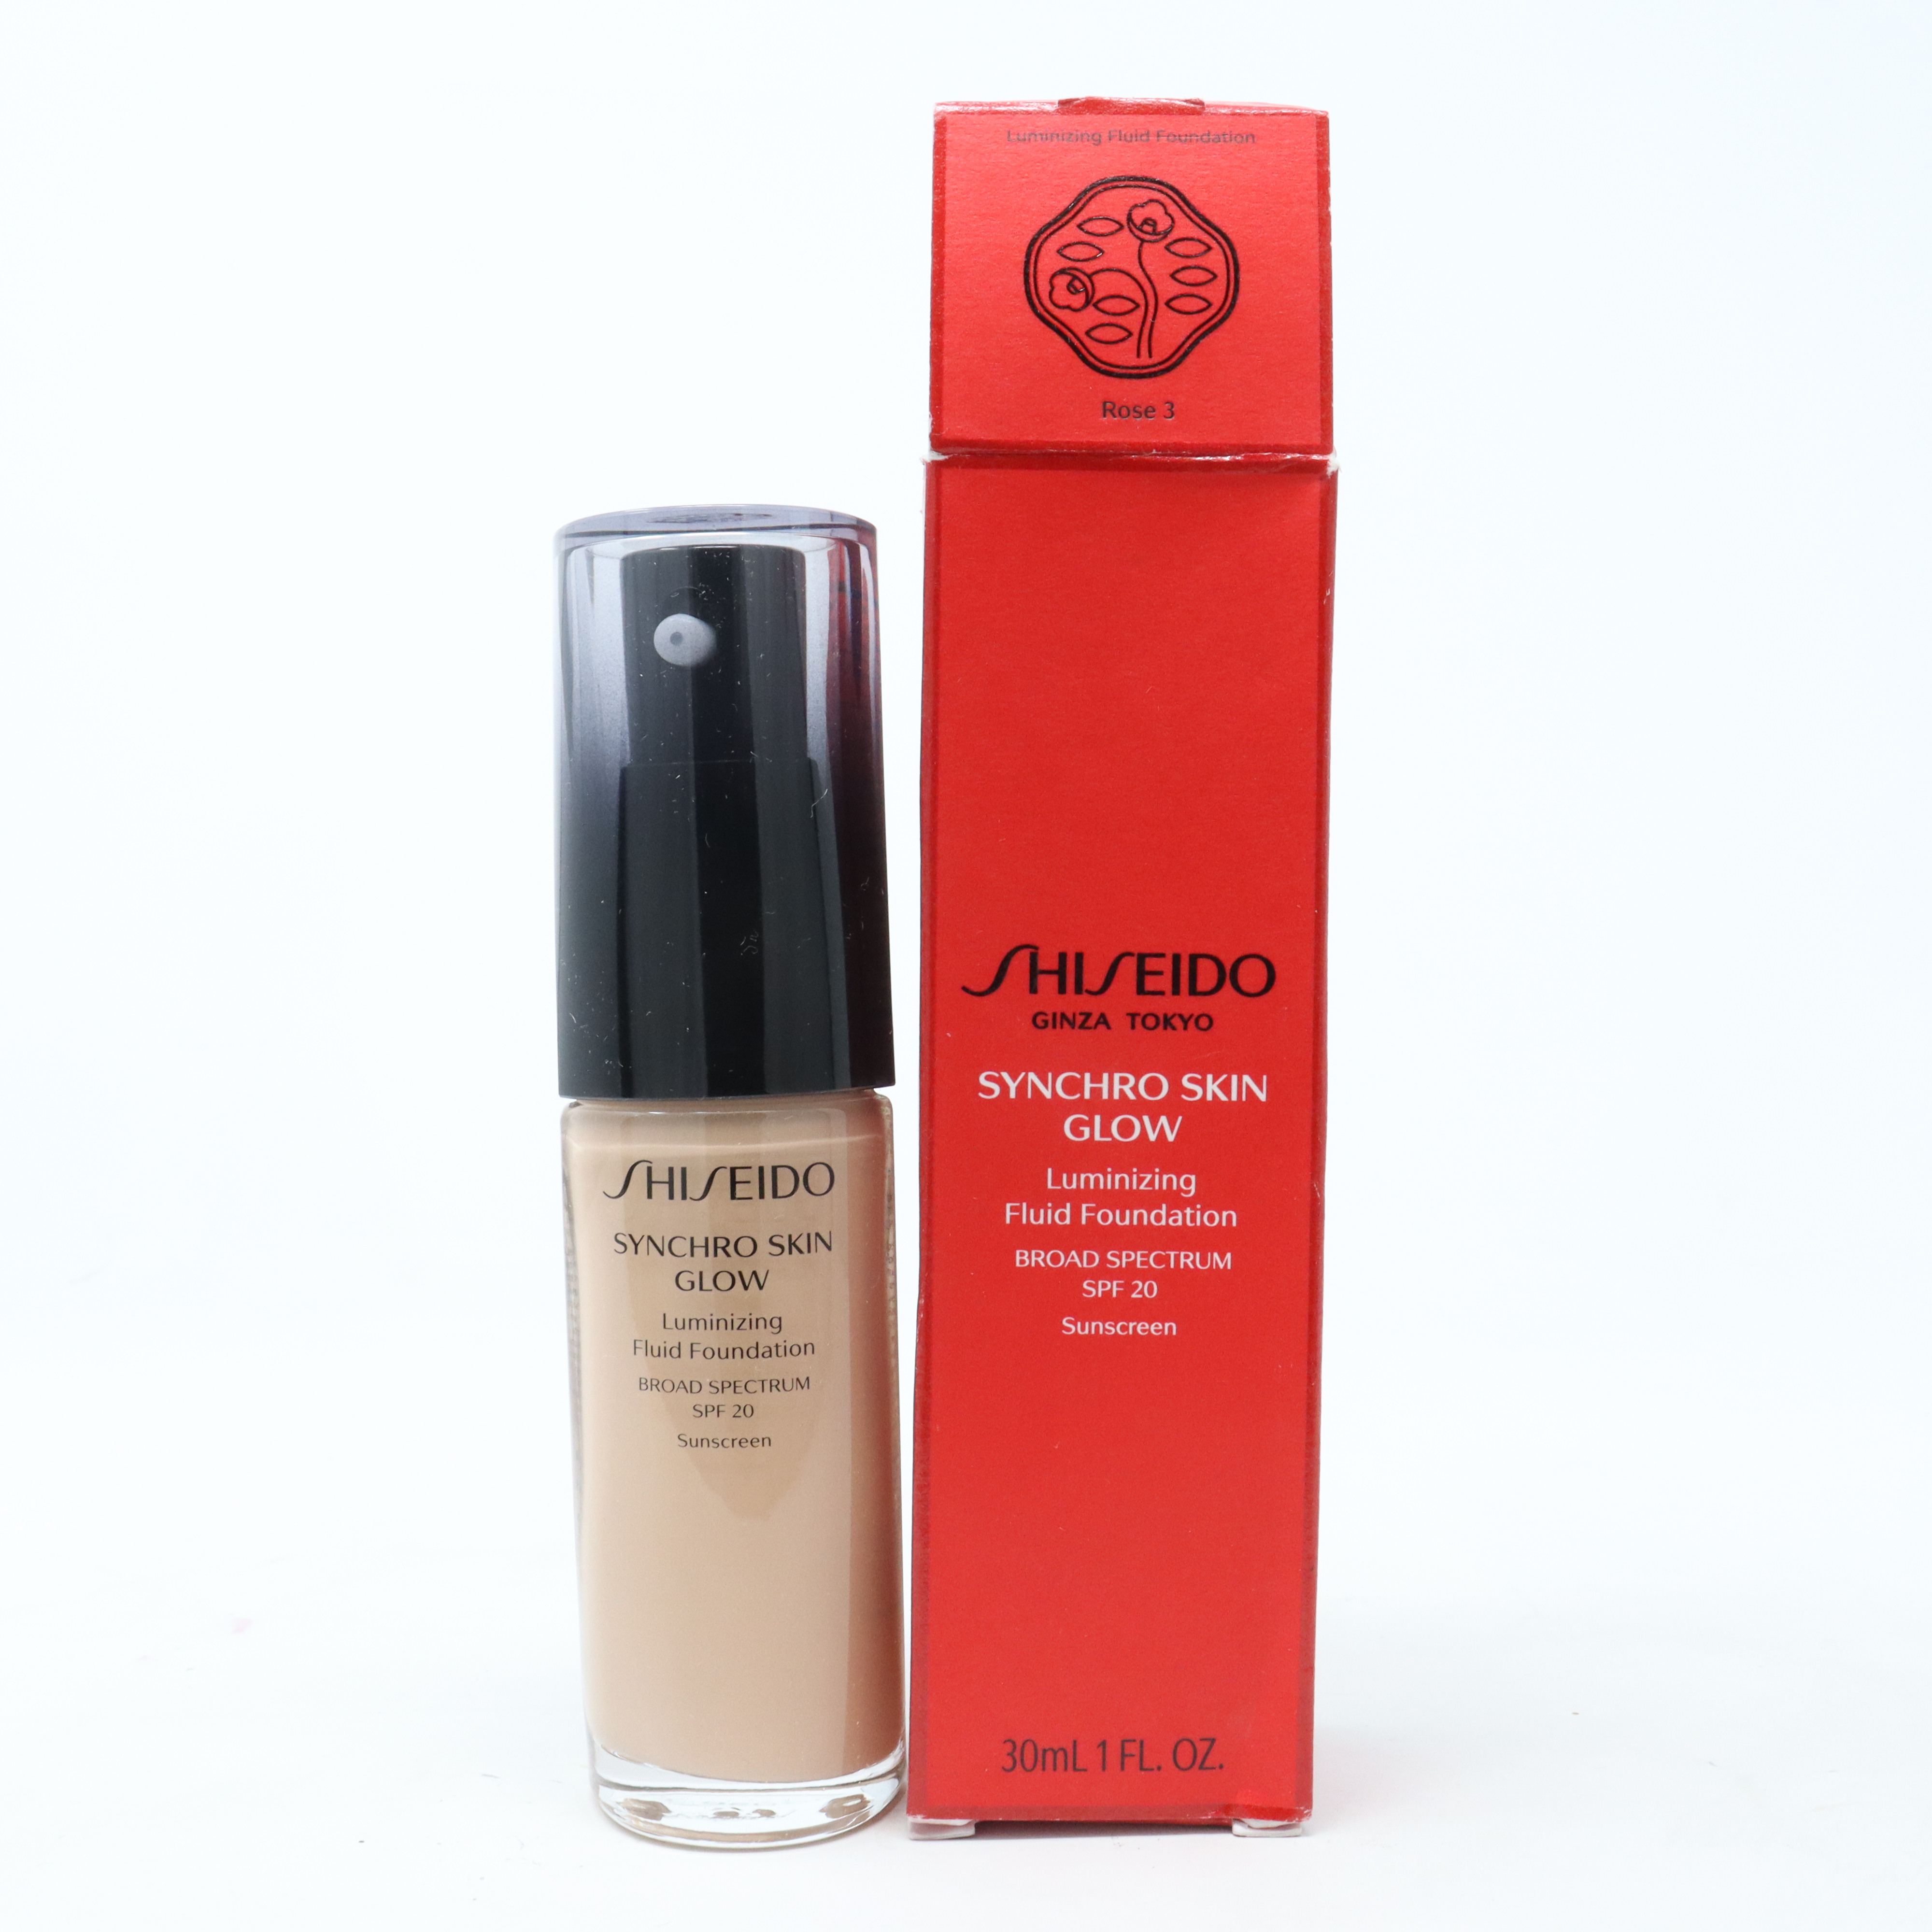 Shiseido флюид. Shiseido Synchro Skin Glow Luminizing SPF 20 Rose 2. Японский для лица Shiseido сияющая база перламутровый. Shiseido Shizuka Red 223 отзывы. Шисейдо ревиталесенс скин Глоу отзывы.